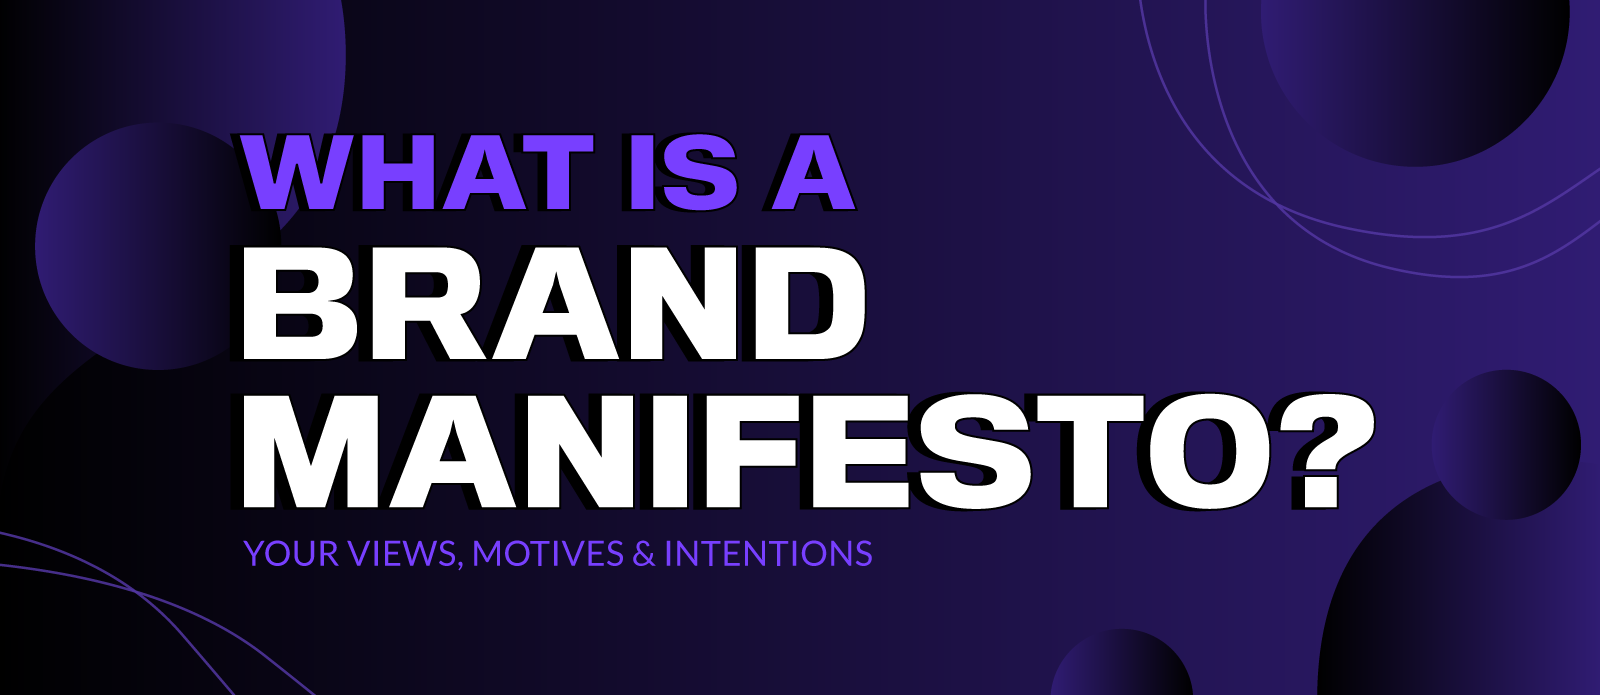 What is Brand Manifesto?